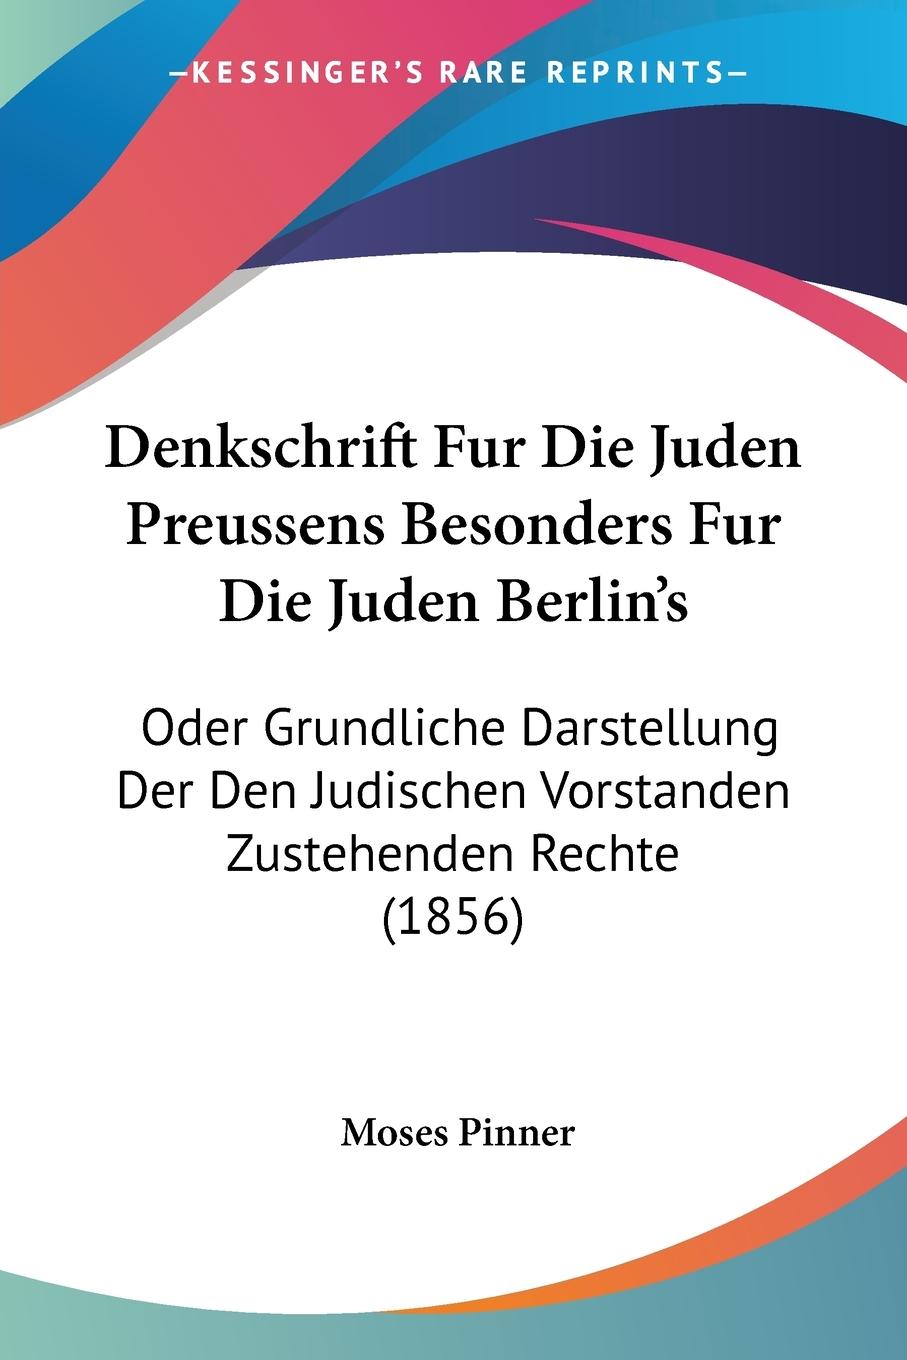 Denkschrift Fur Die Juden Preussens Besonders Fur Die Juden Berlin s - Pinner, Moses